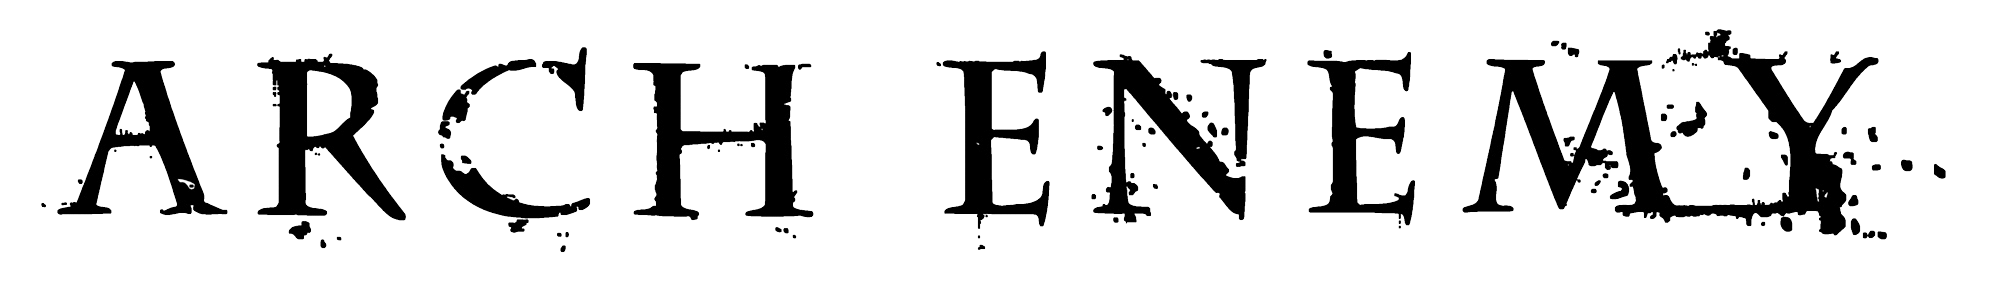 Logo Arch Enemy PNG - 28448